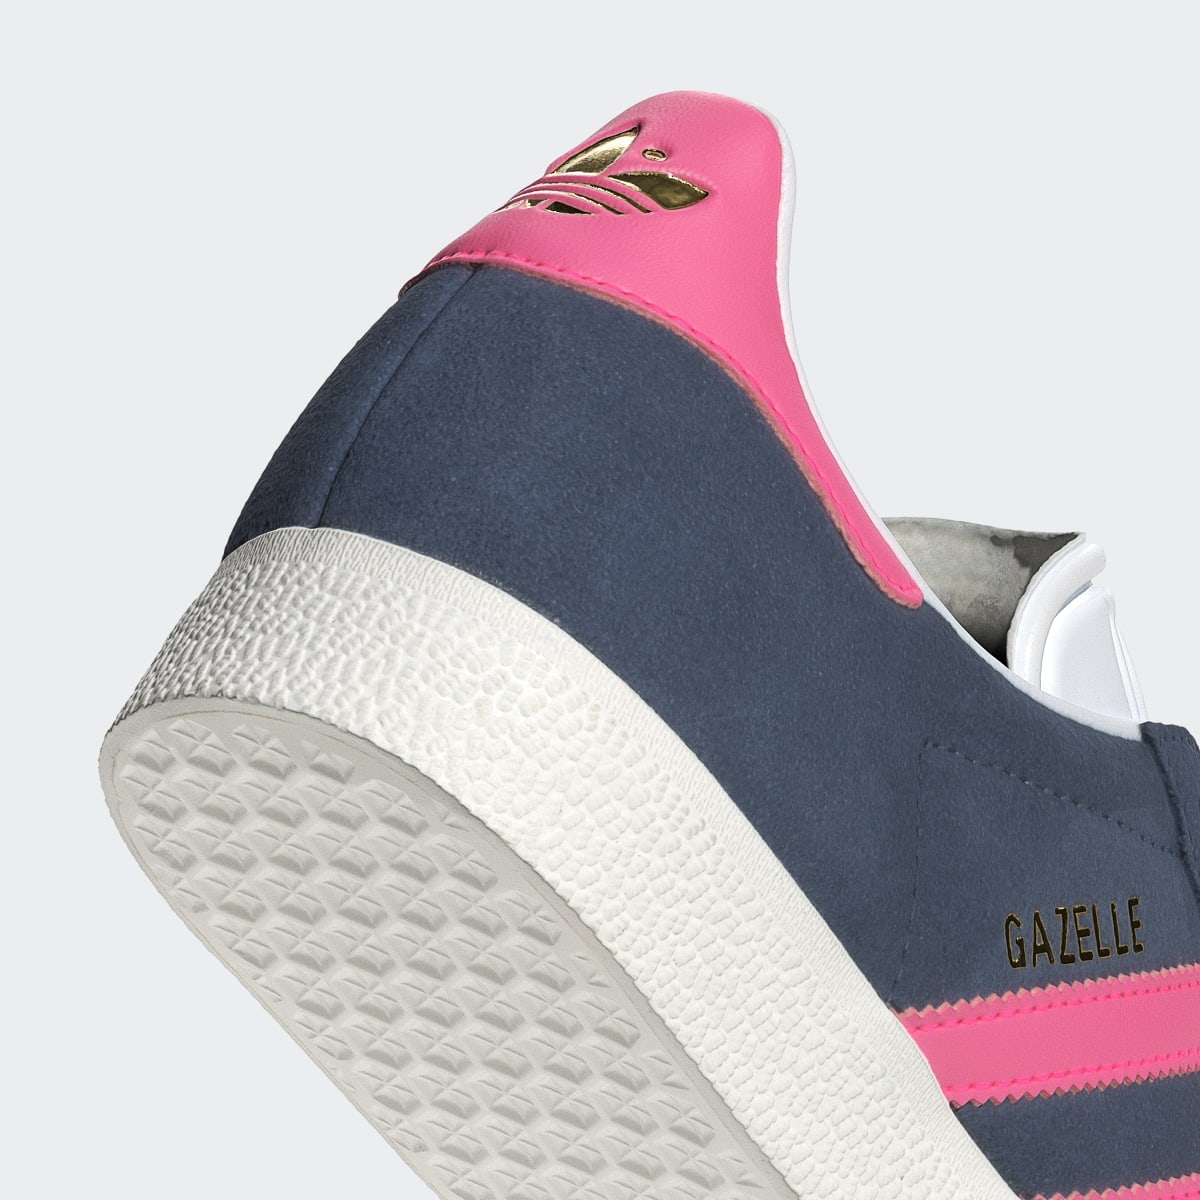 Adidas Chaussure Gazelle. 10